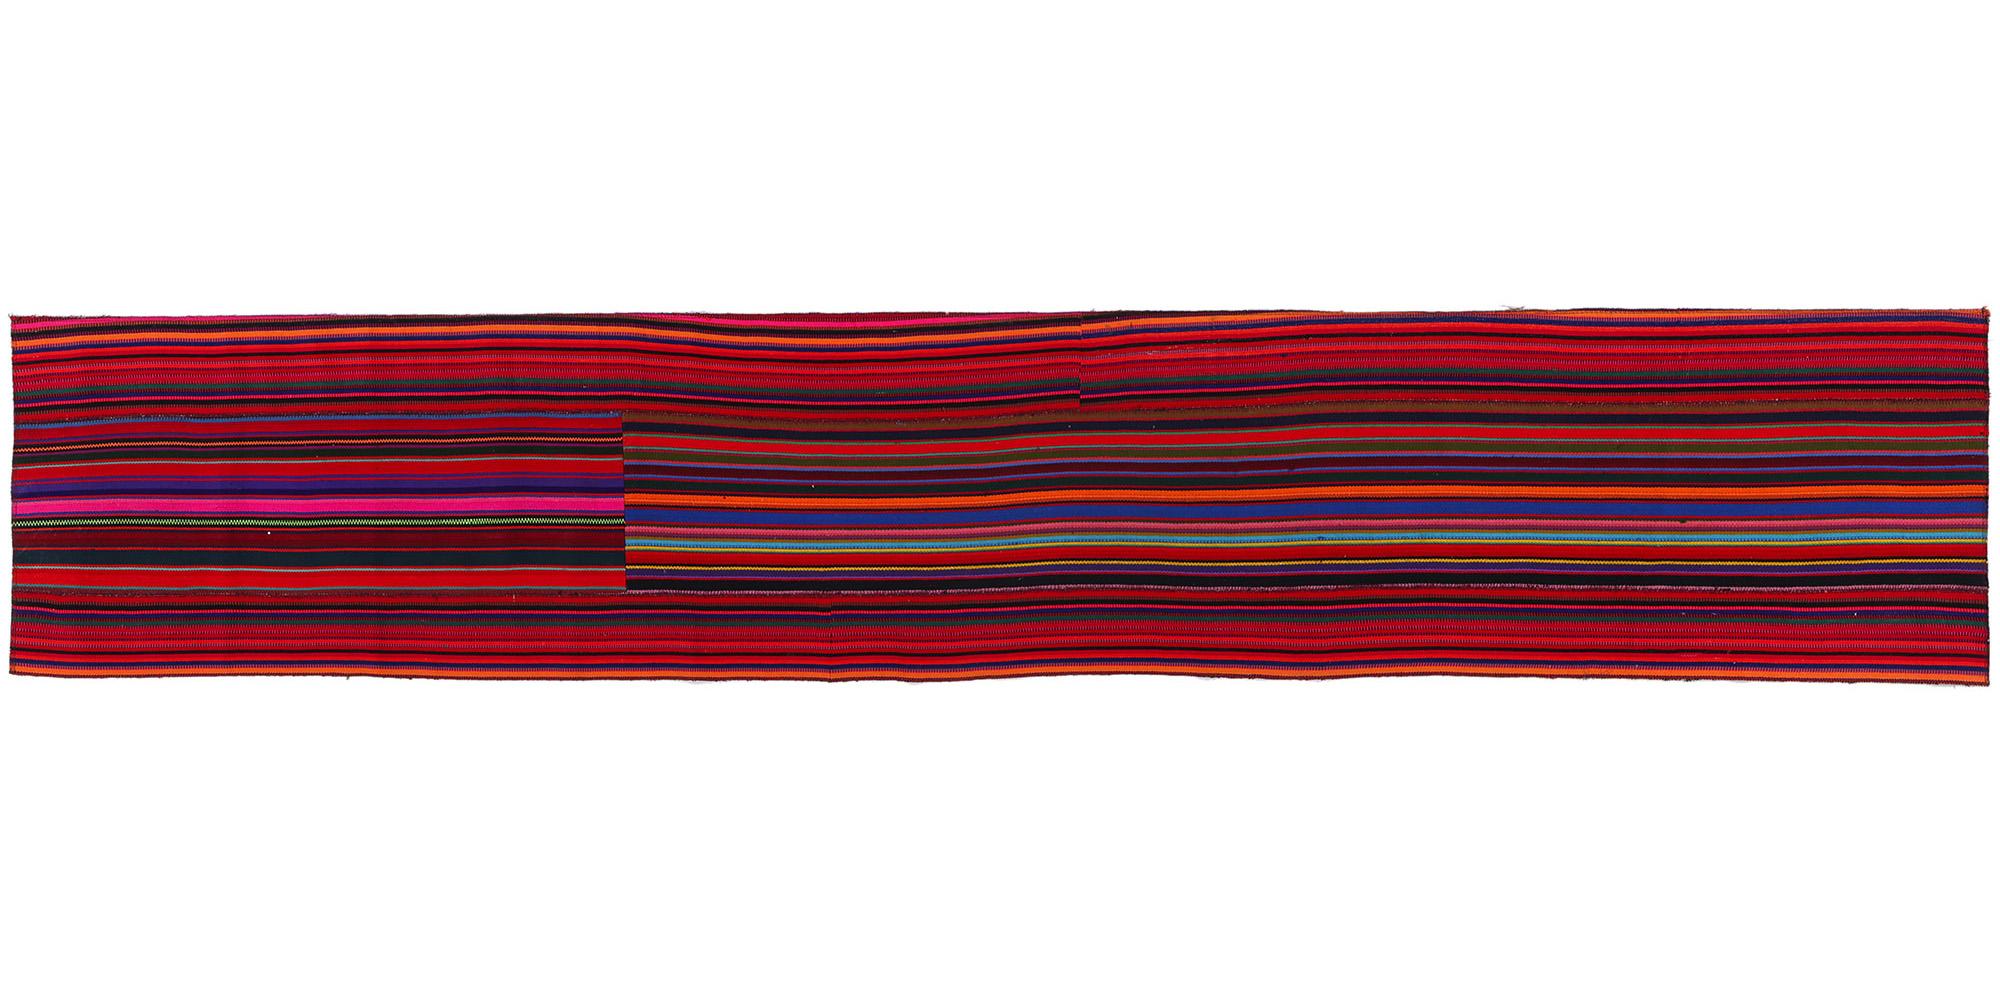  Vintage Turkish Striped Kilim Rug, Colorful Bohemian Meets Maximalist Elegance For Sale 3